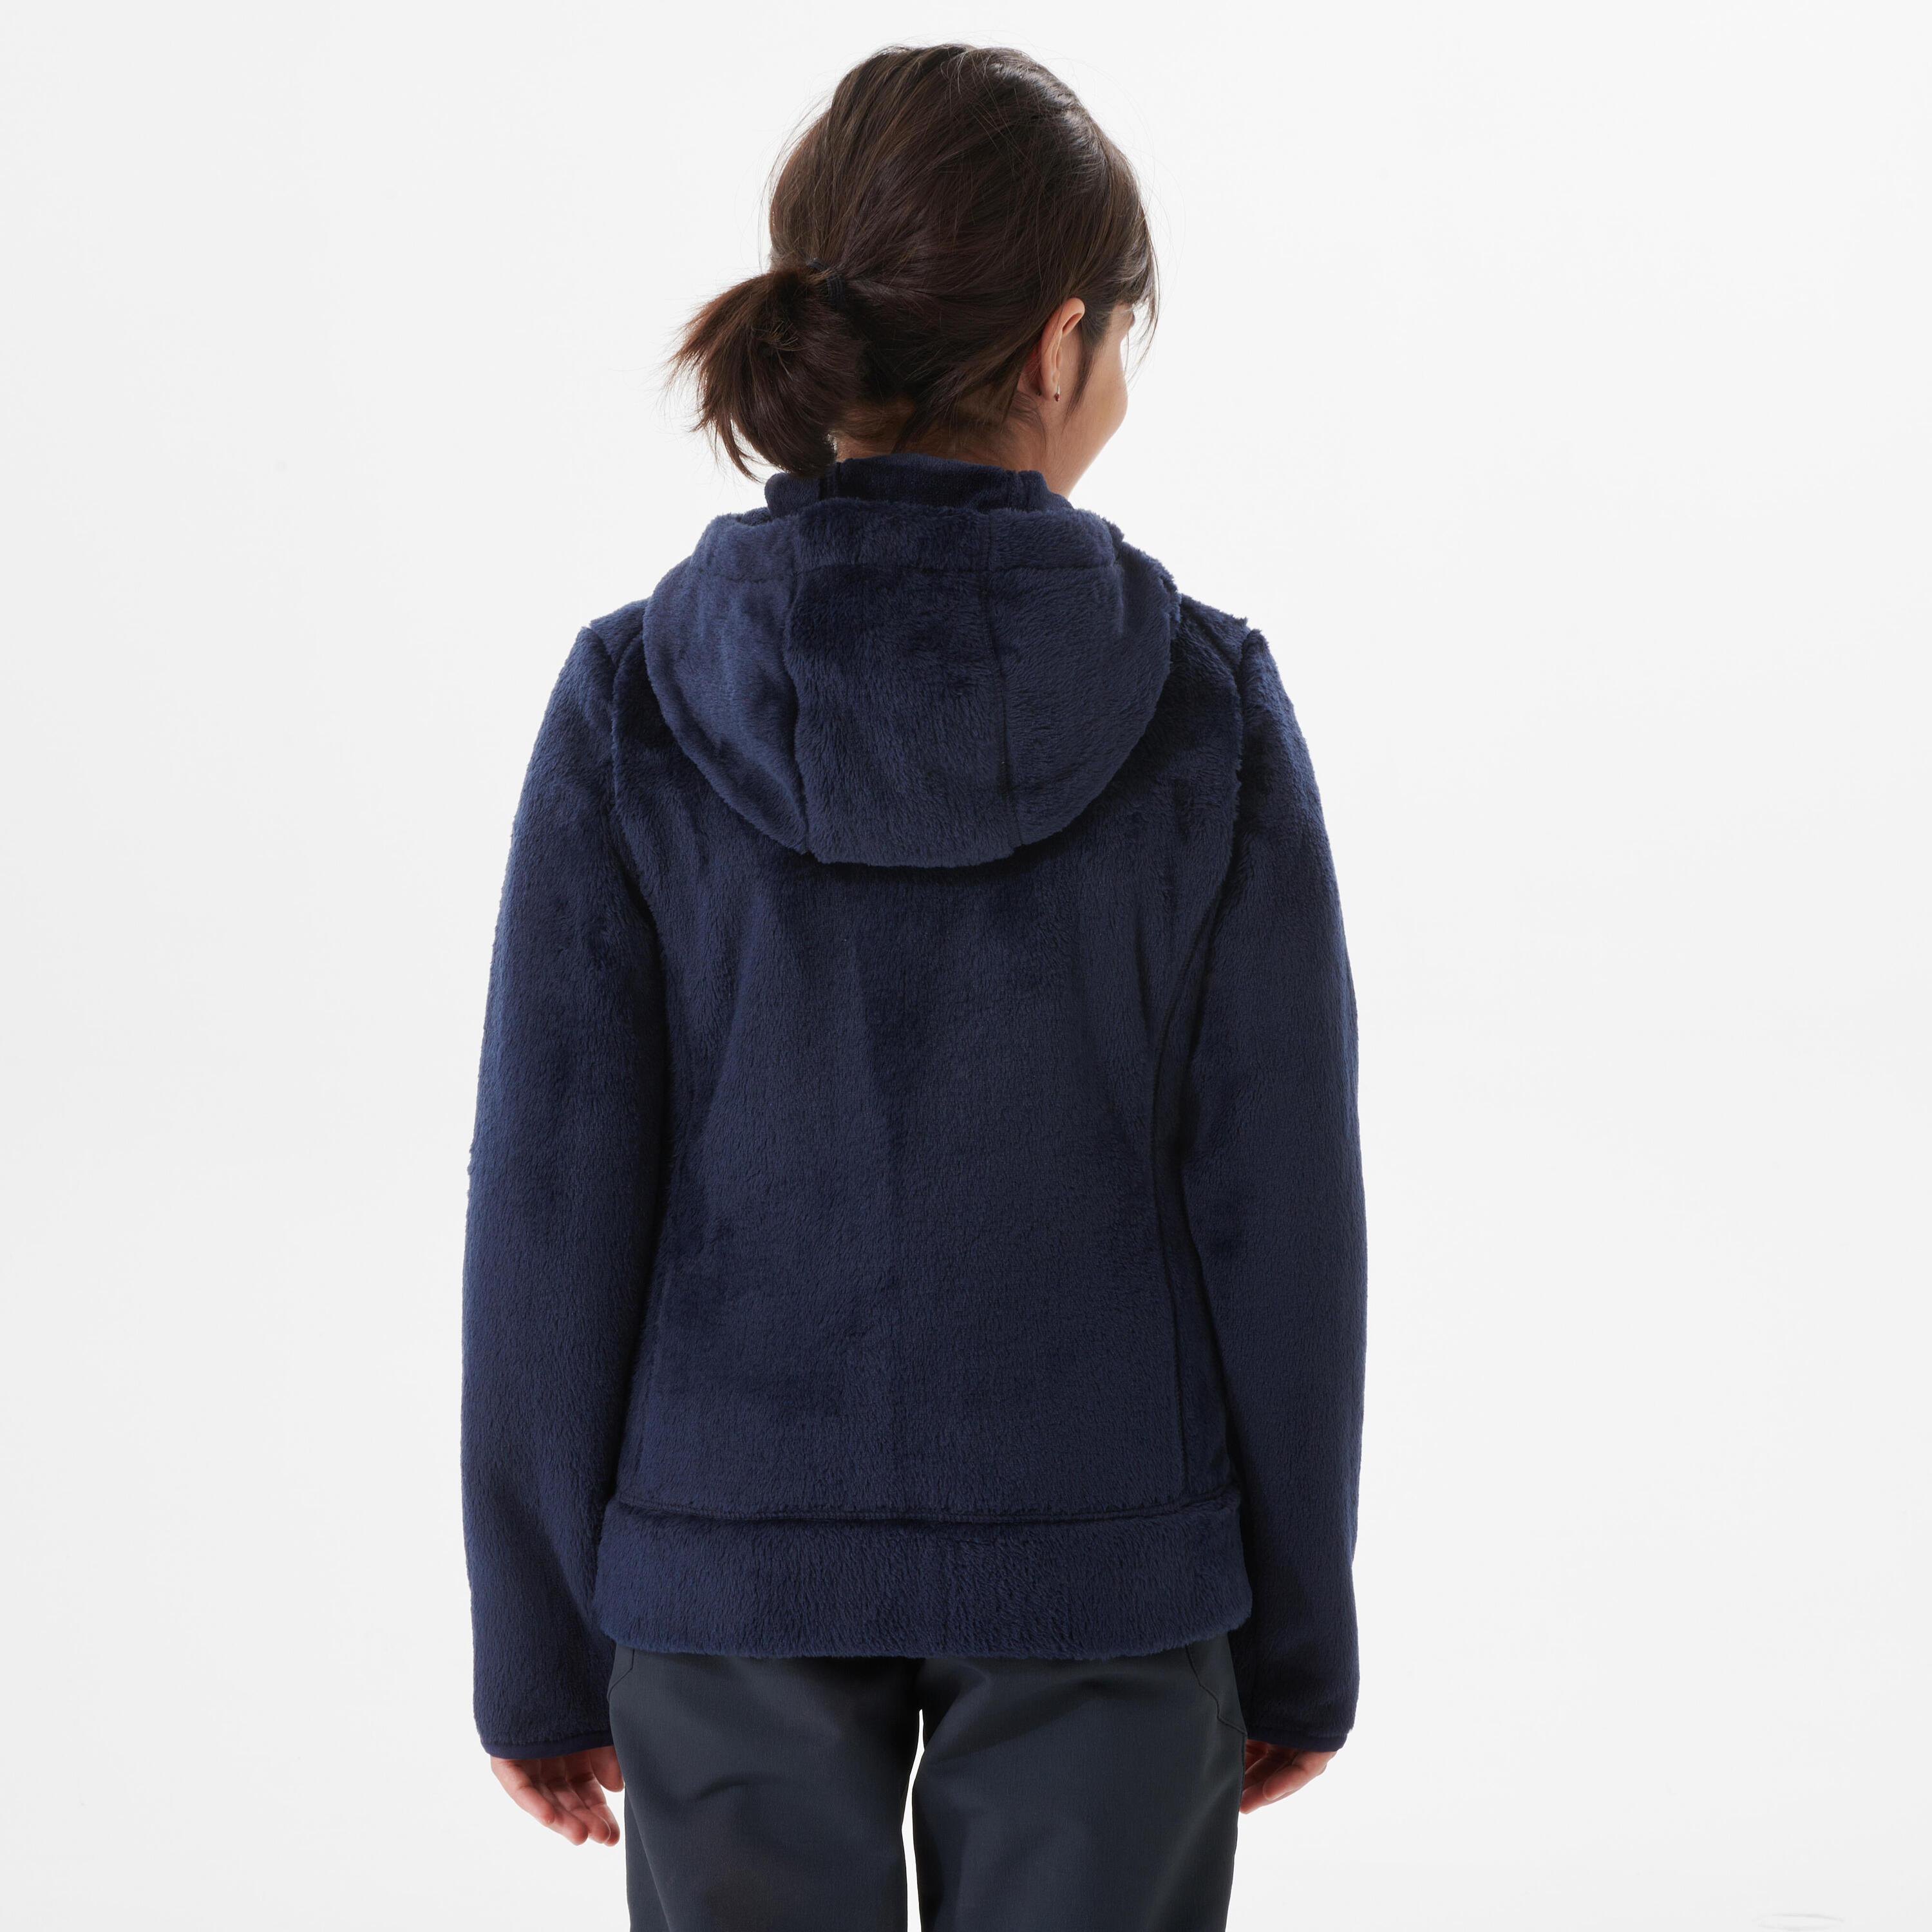 Kids’ Warm Hiking Fleece Jacket - MH500 Aged 7-15 - Navy Blue 3/11